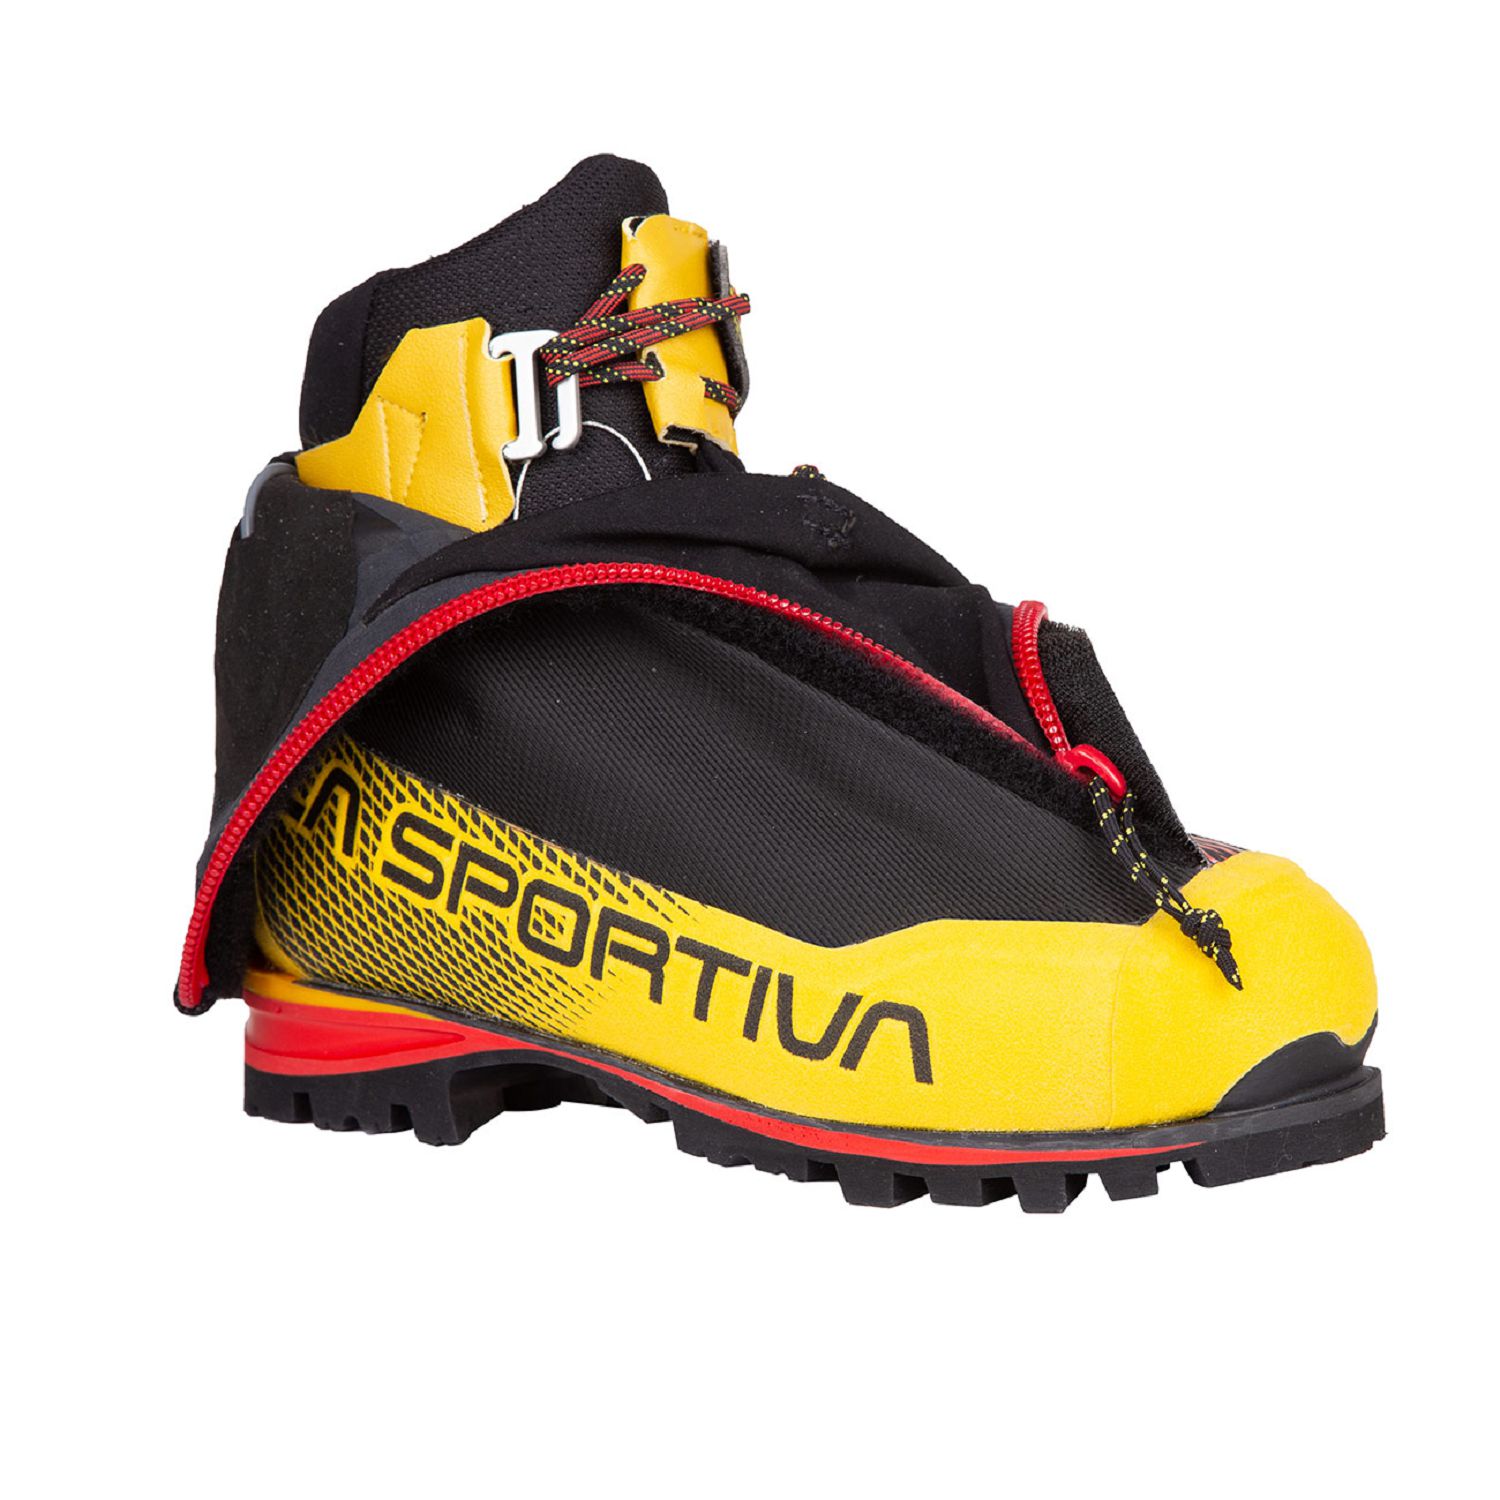 Ботинки для технического альпинизма La Sportiva G5 Evo